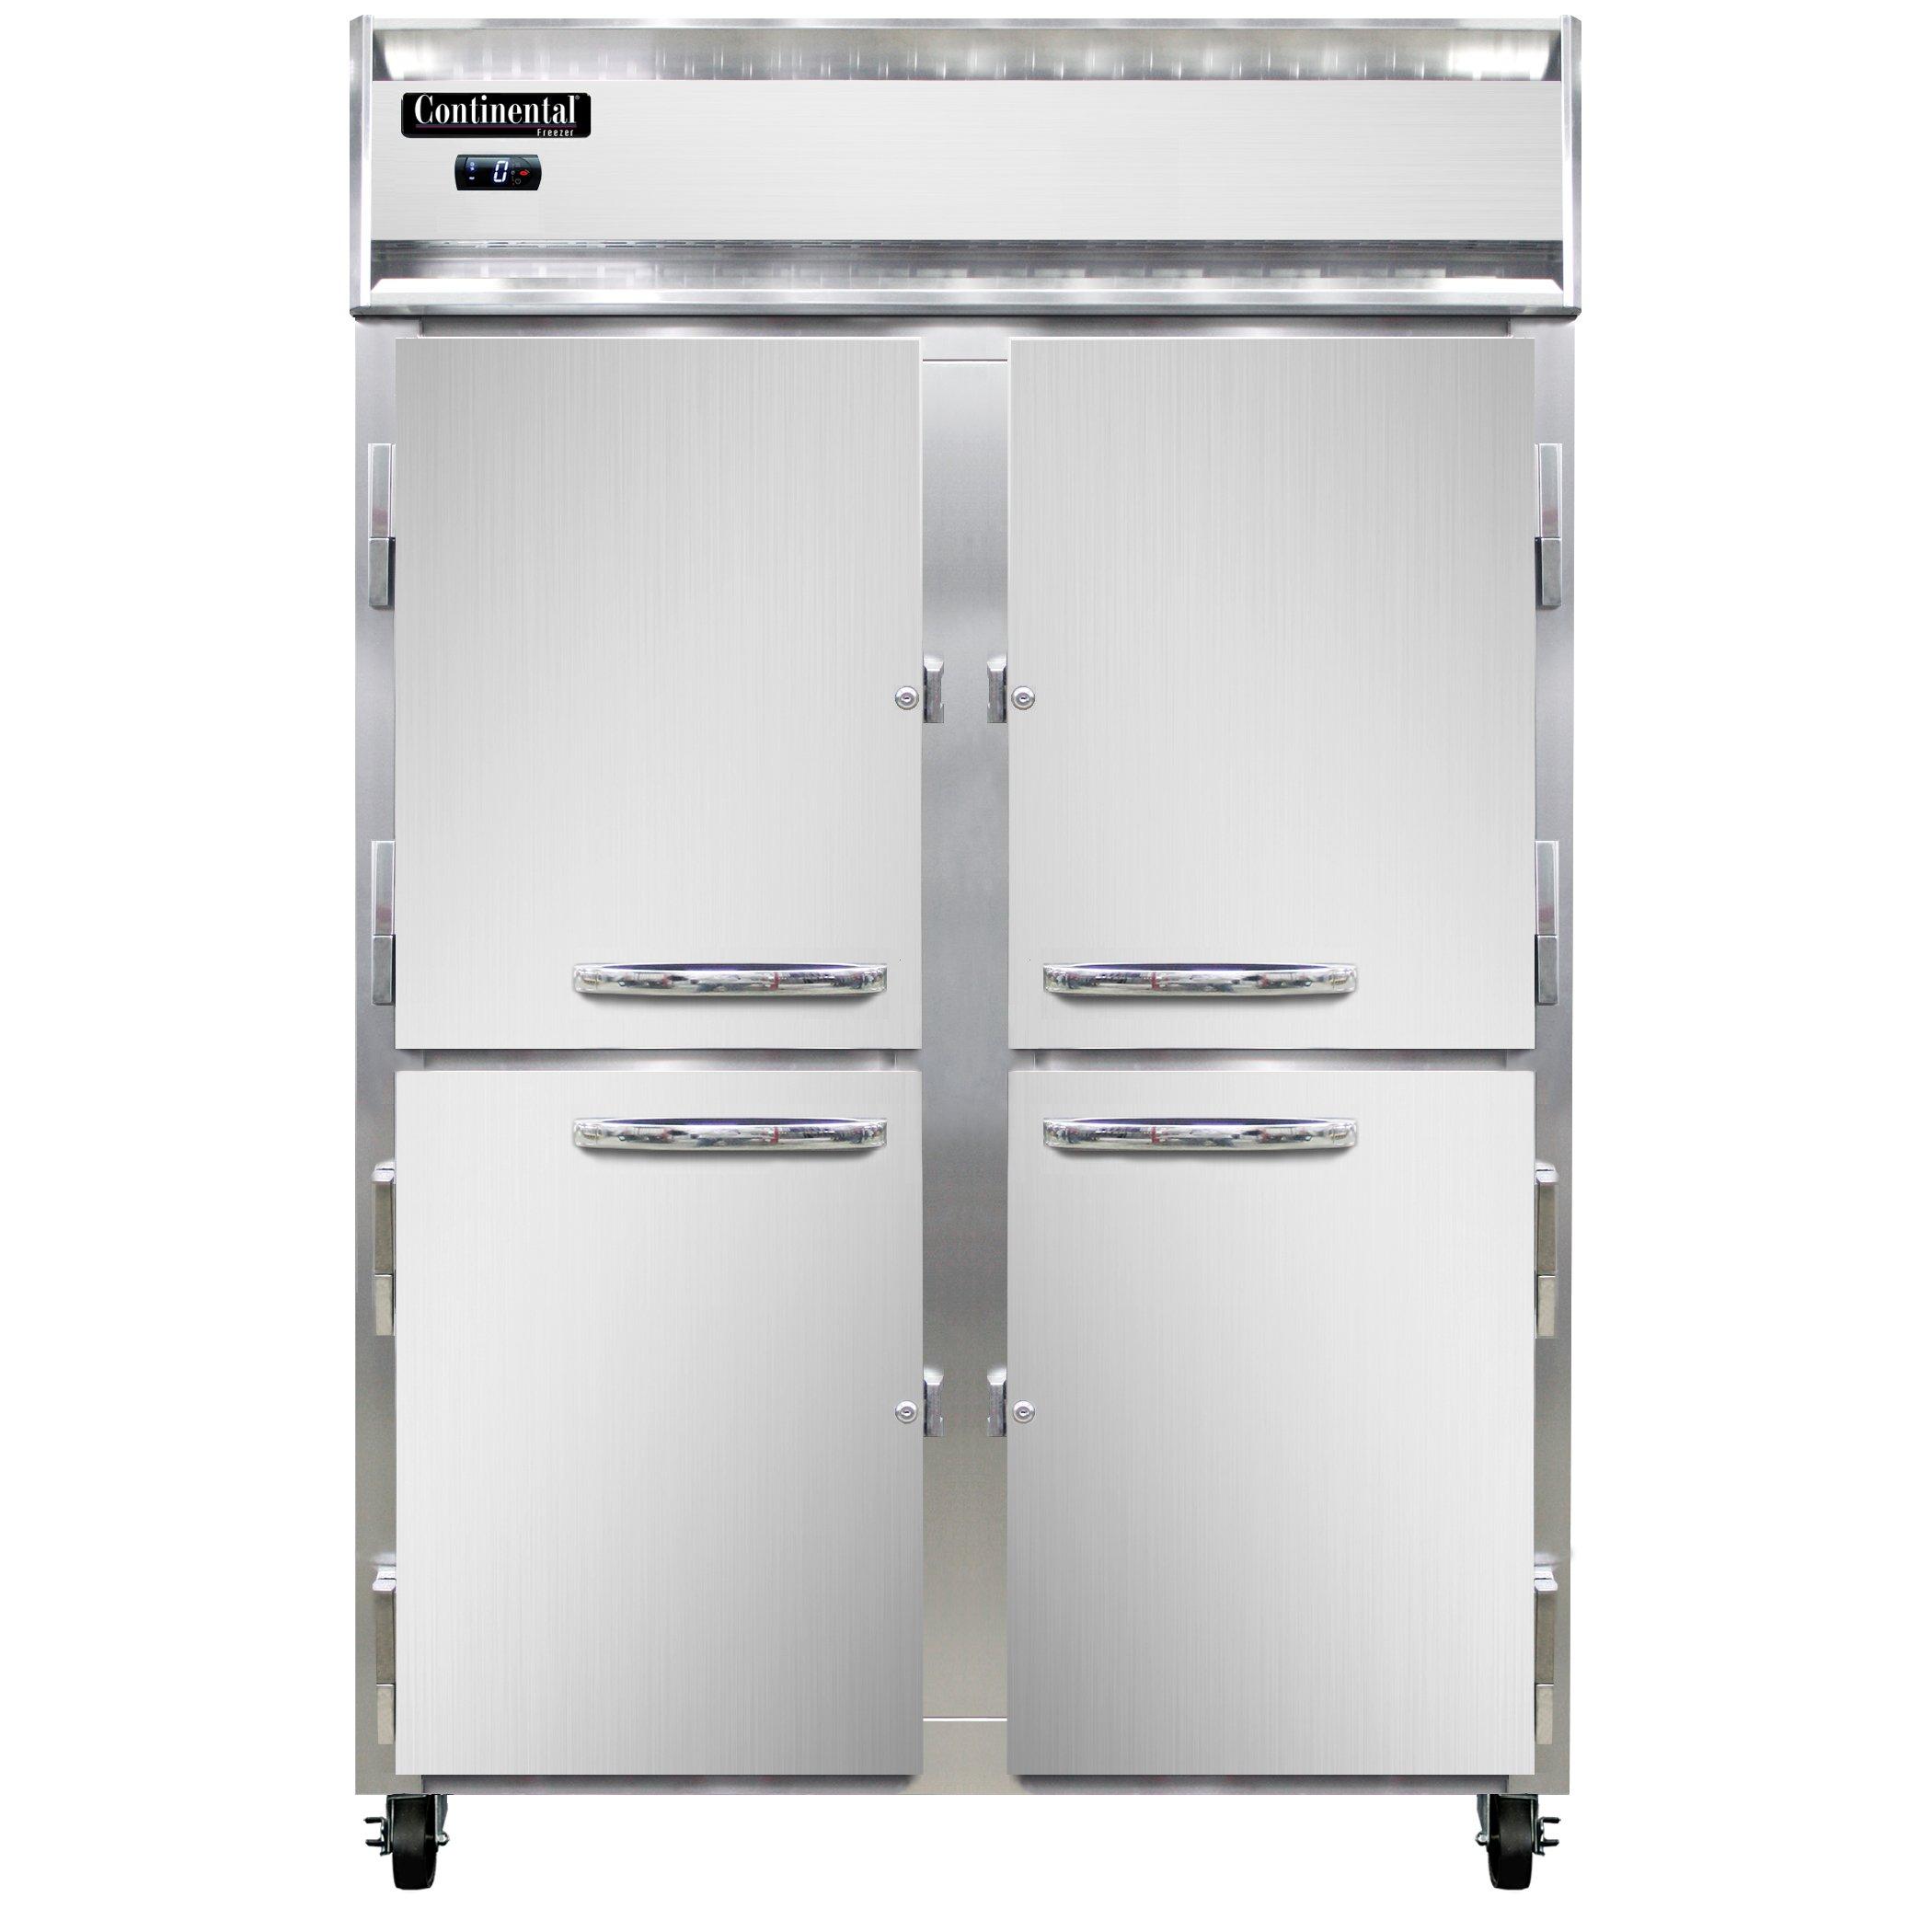 Continental Refrigerator 2FNHD Reach-In Freezer